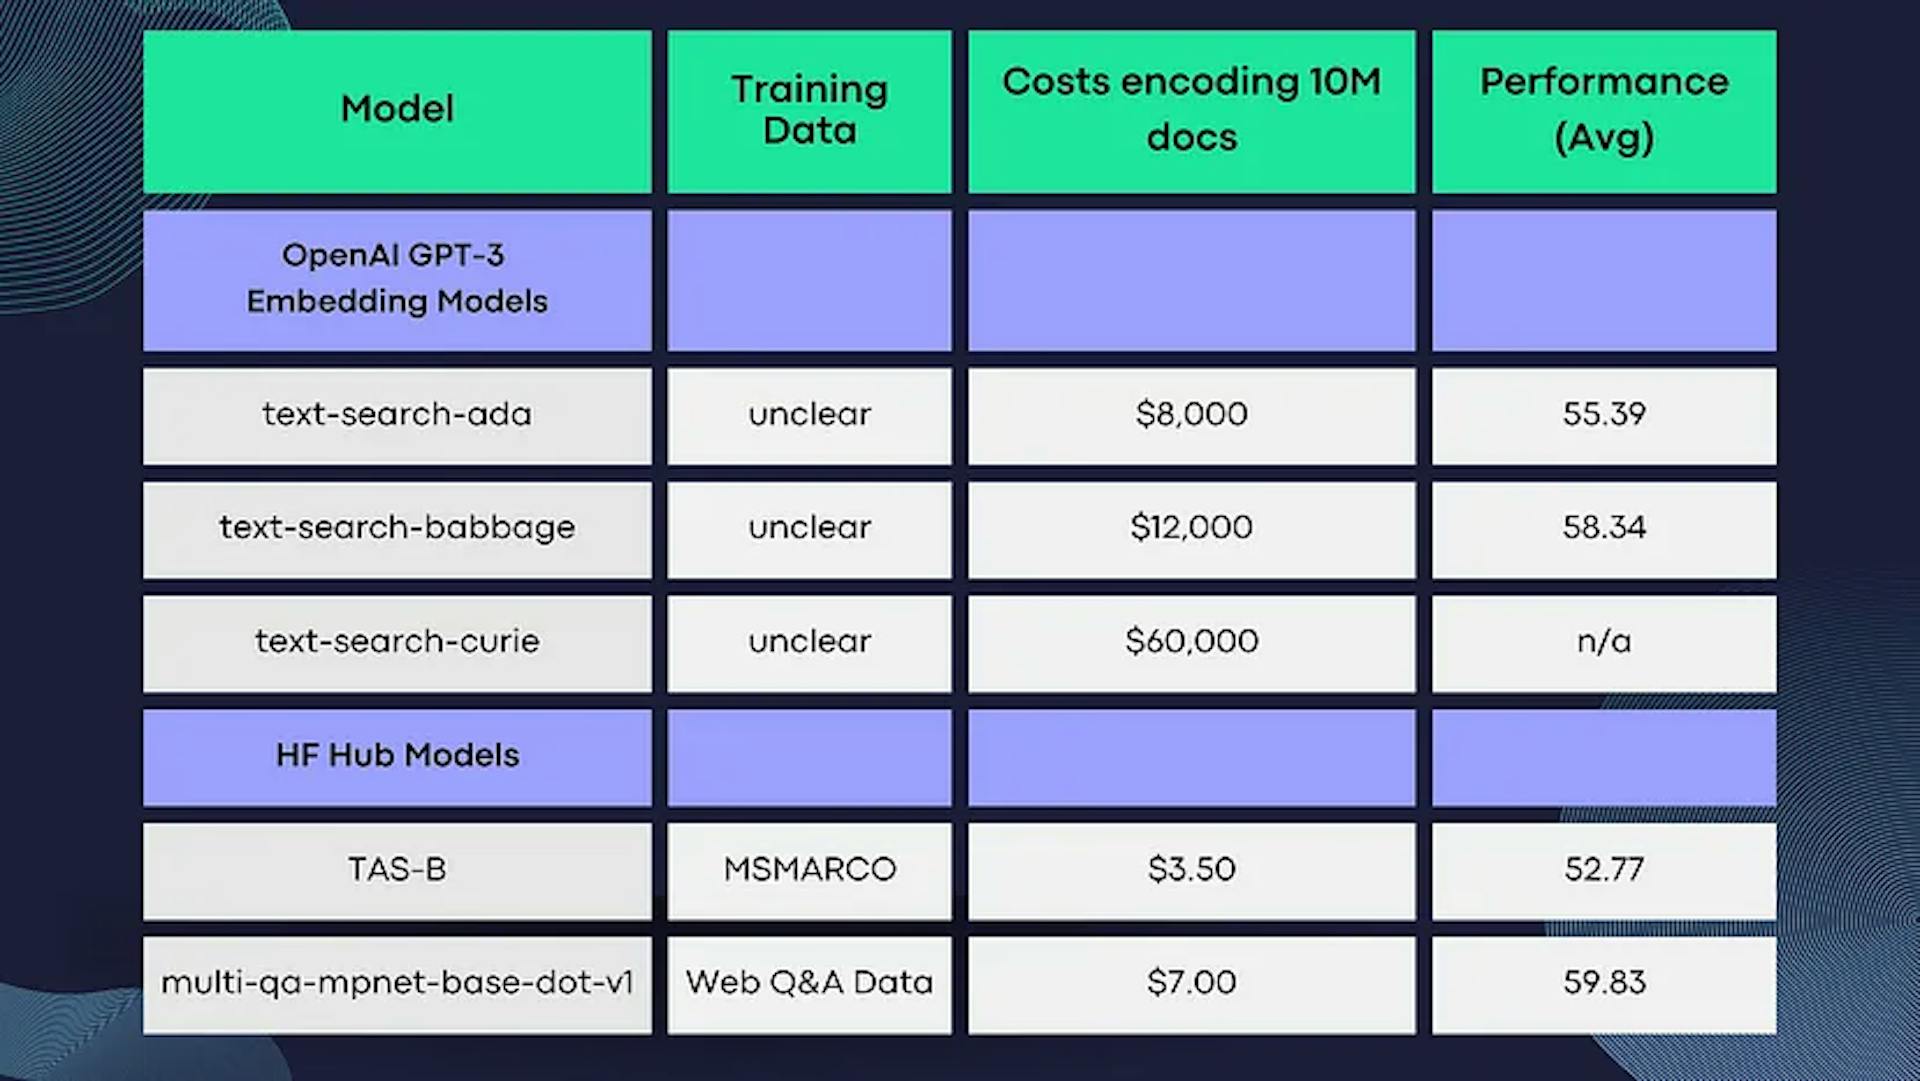 Training cost image